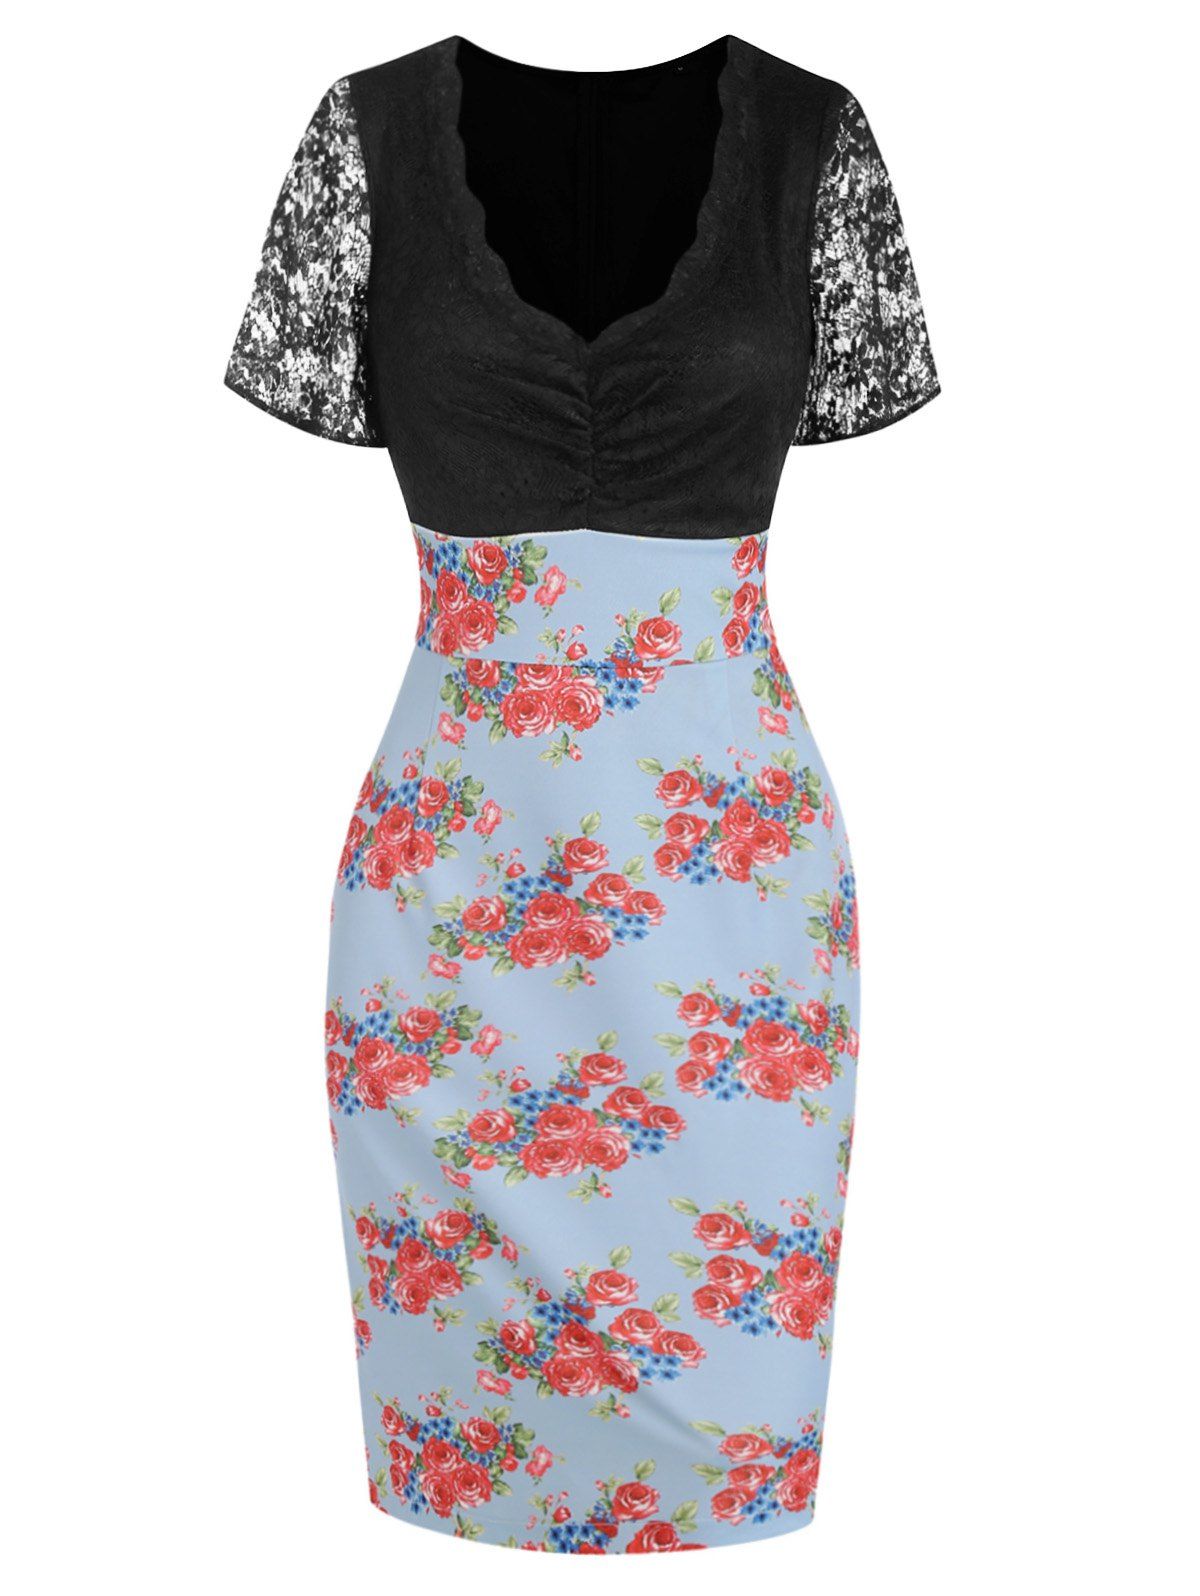 Summer Beach Vintage Straight Midi Dress Floral Print Lace Insert Scalloped High Waist Dress - LIGHT BLUE XL